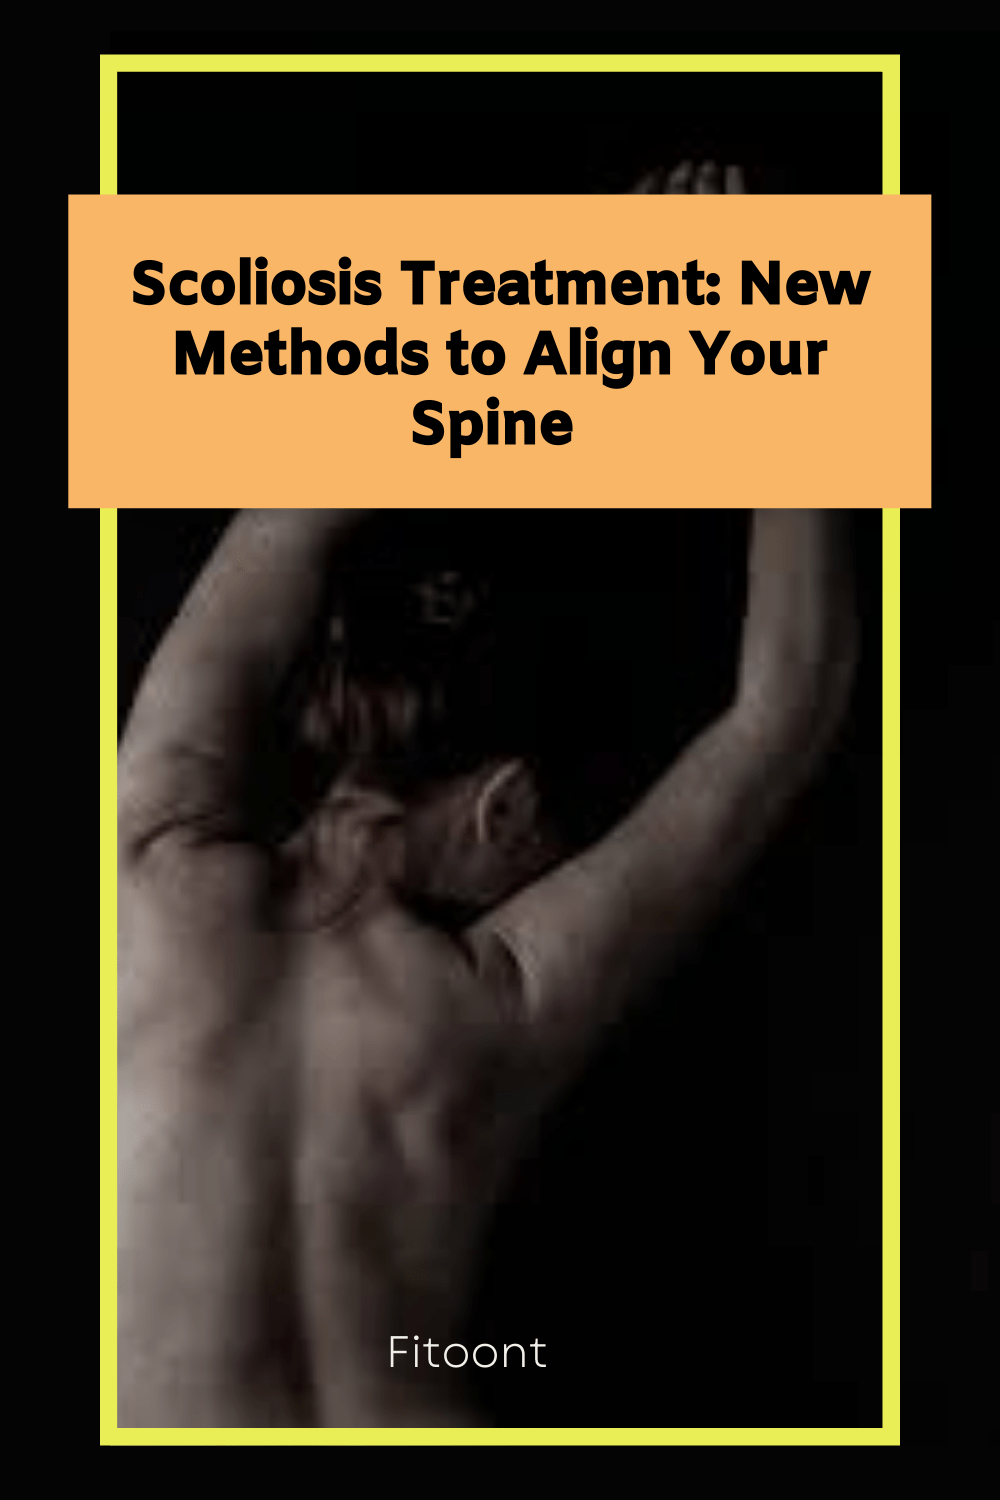 scoliosis treatment, scoliosis treatment exercises, scoliosis exercises, scoliosis physical therapy